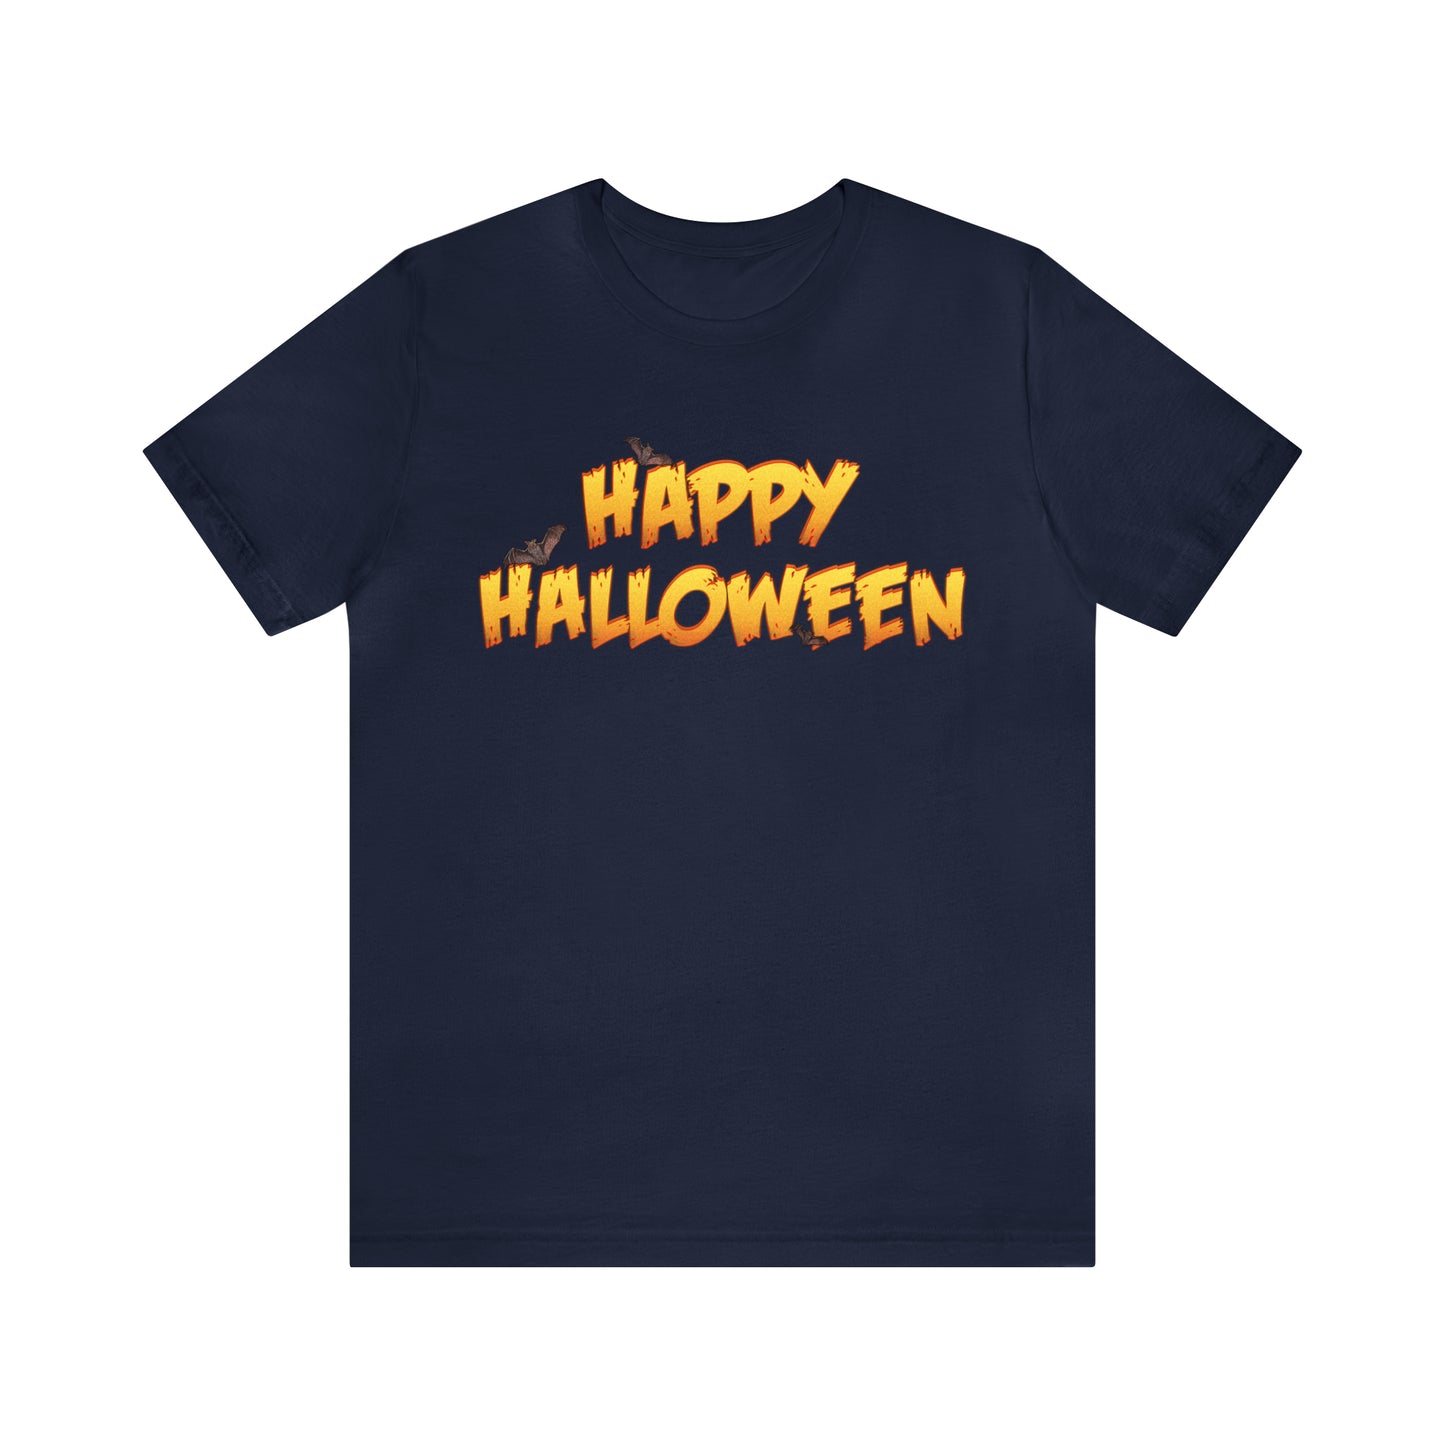 Happy Halloween Shirts, Halloween Shirts, Fall Shirts, Halloween Outfits, Halloween Funny Shirt, Funny Halloween Shirts, T838